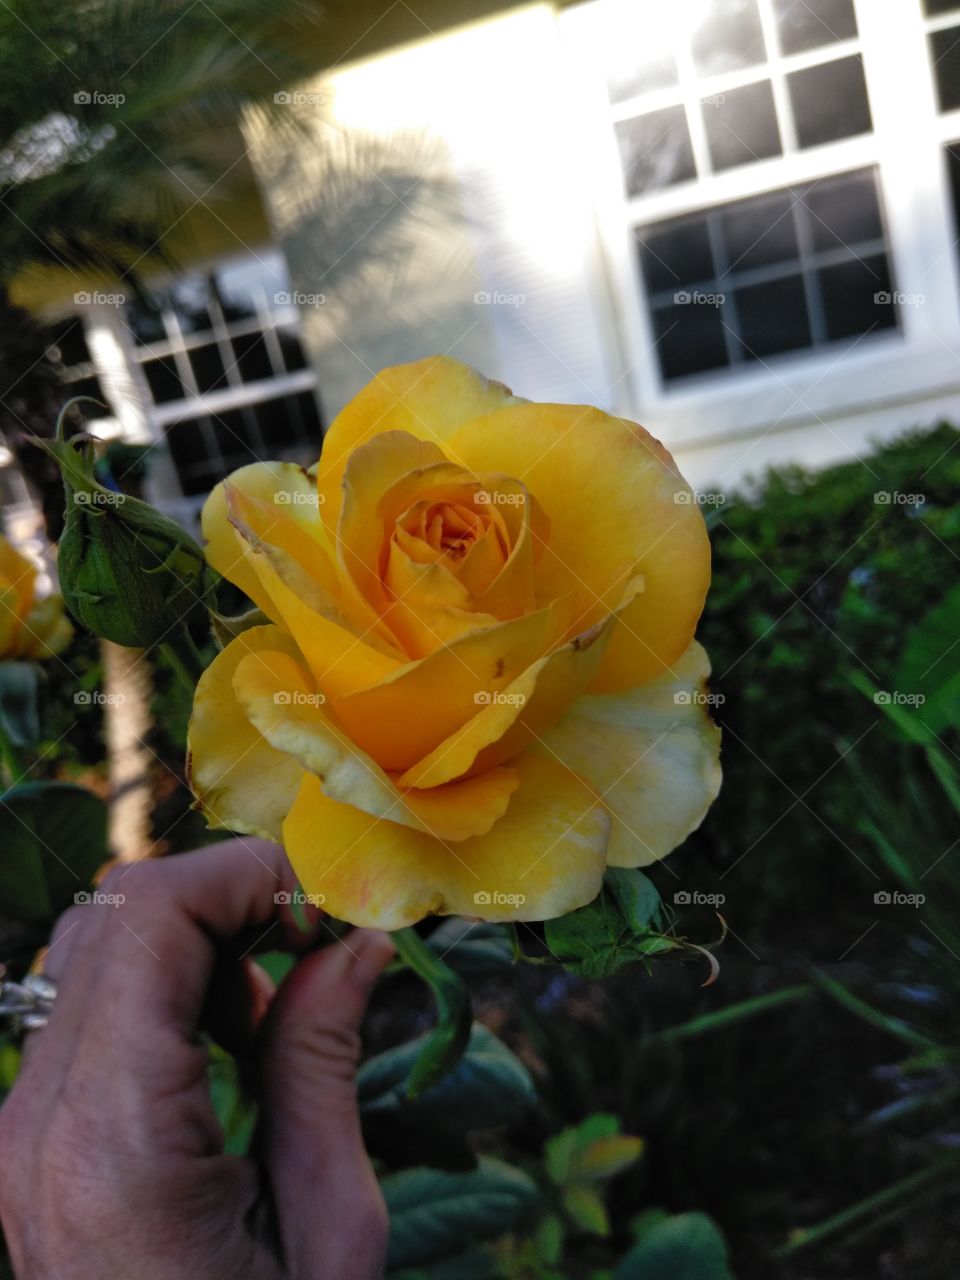 Golden rose blooming